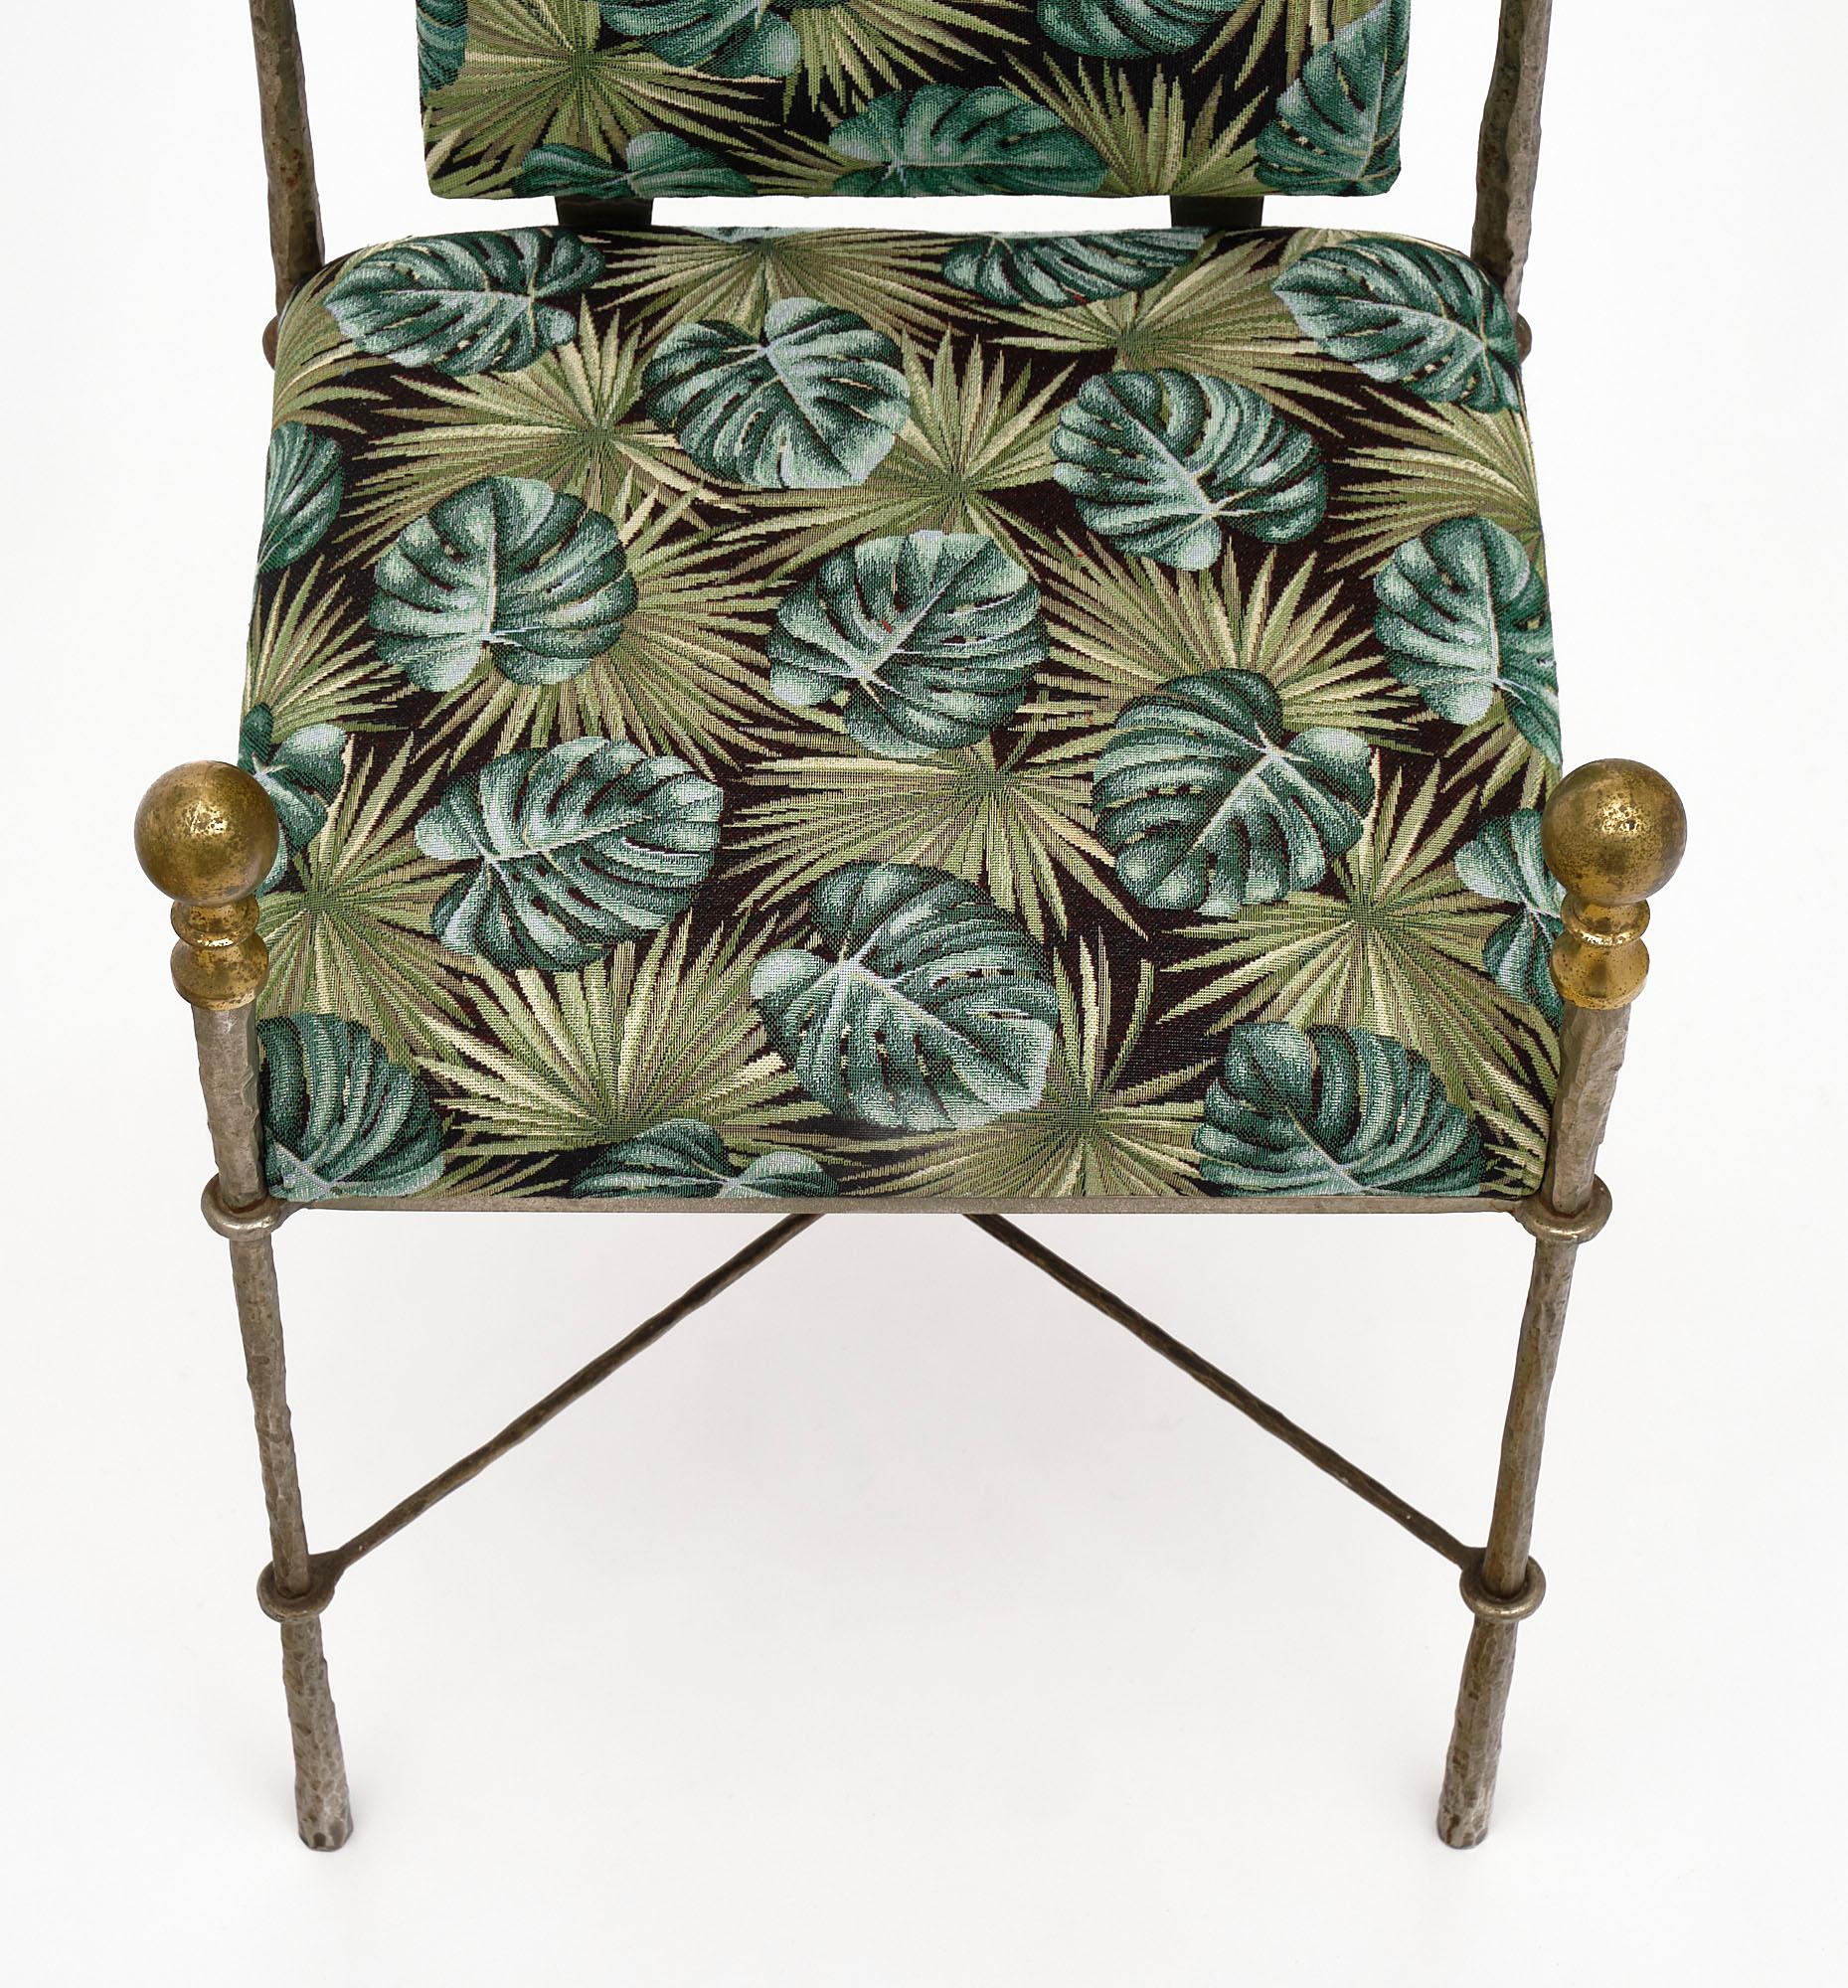 Modern Vintage “Giacometti” Style Armchair